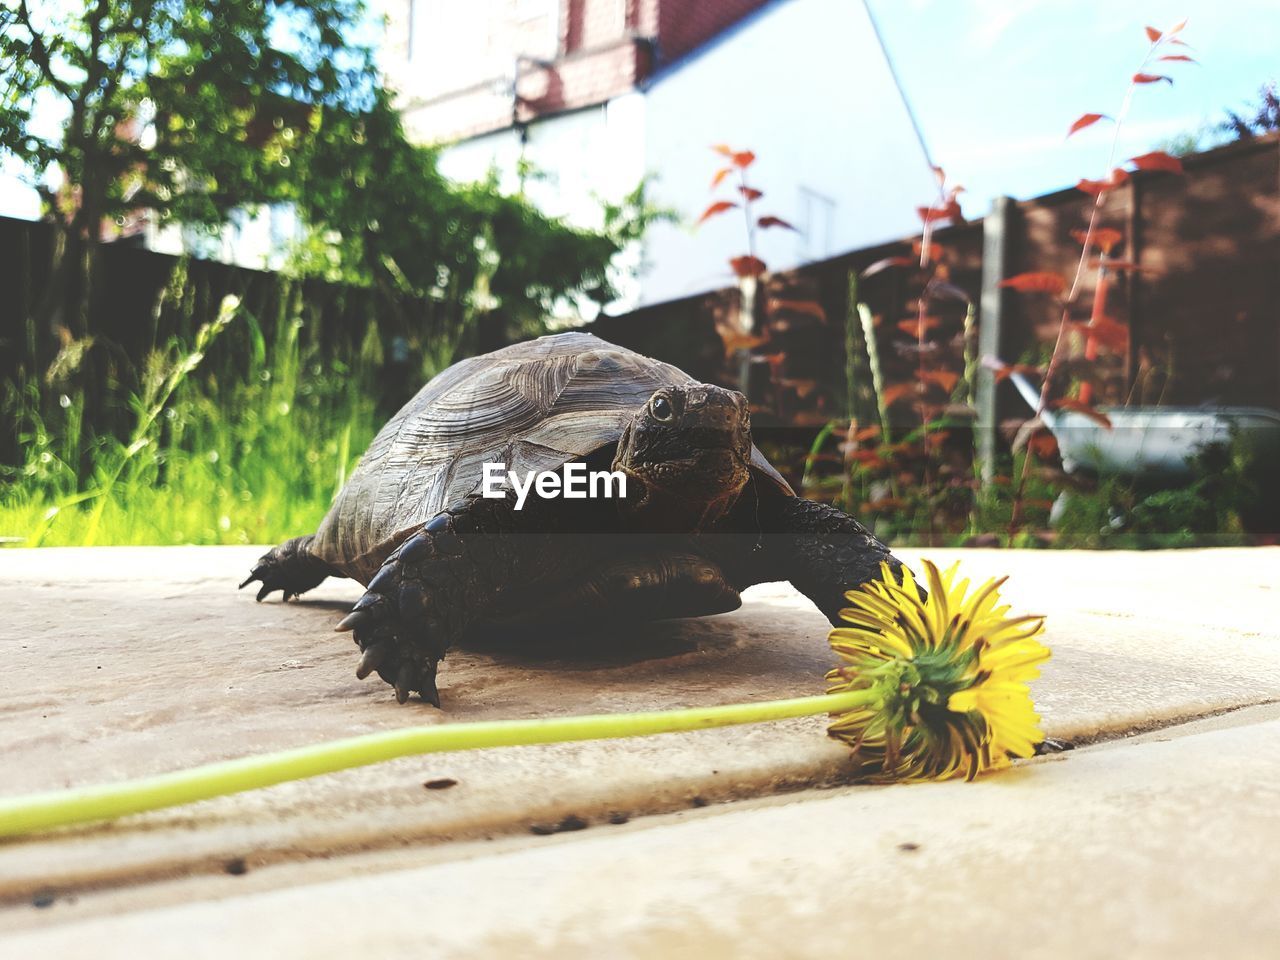 Tortoise reaching flower to feed 